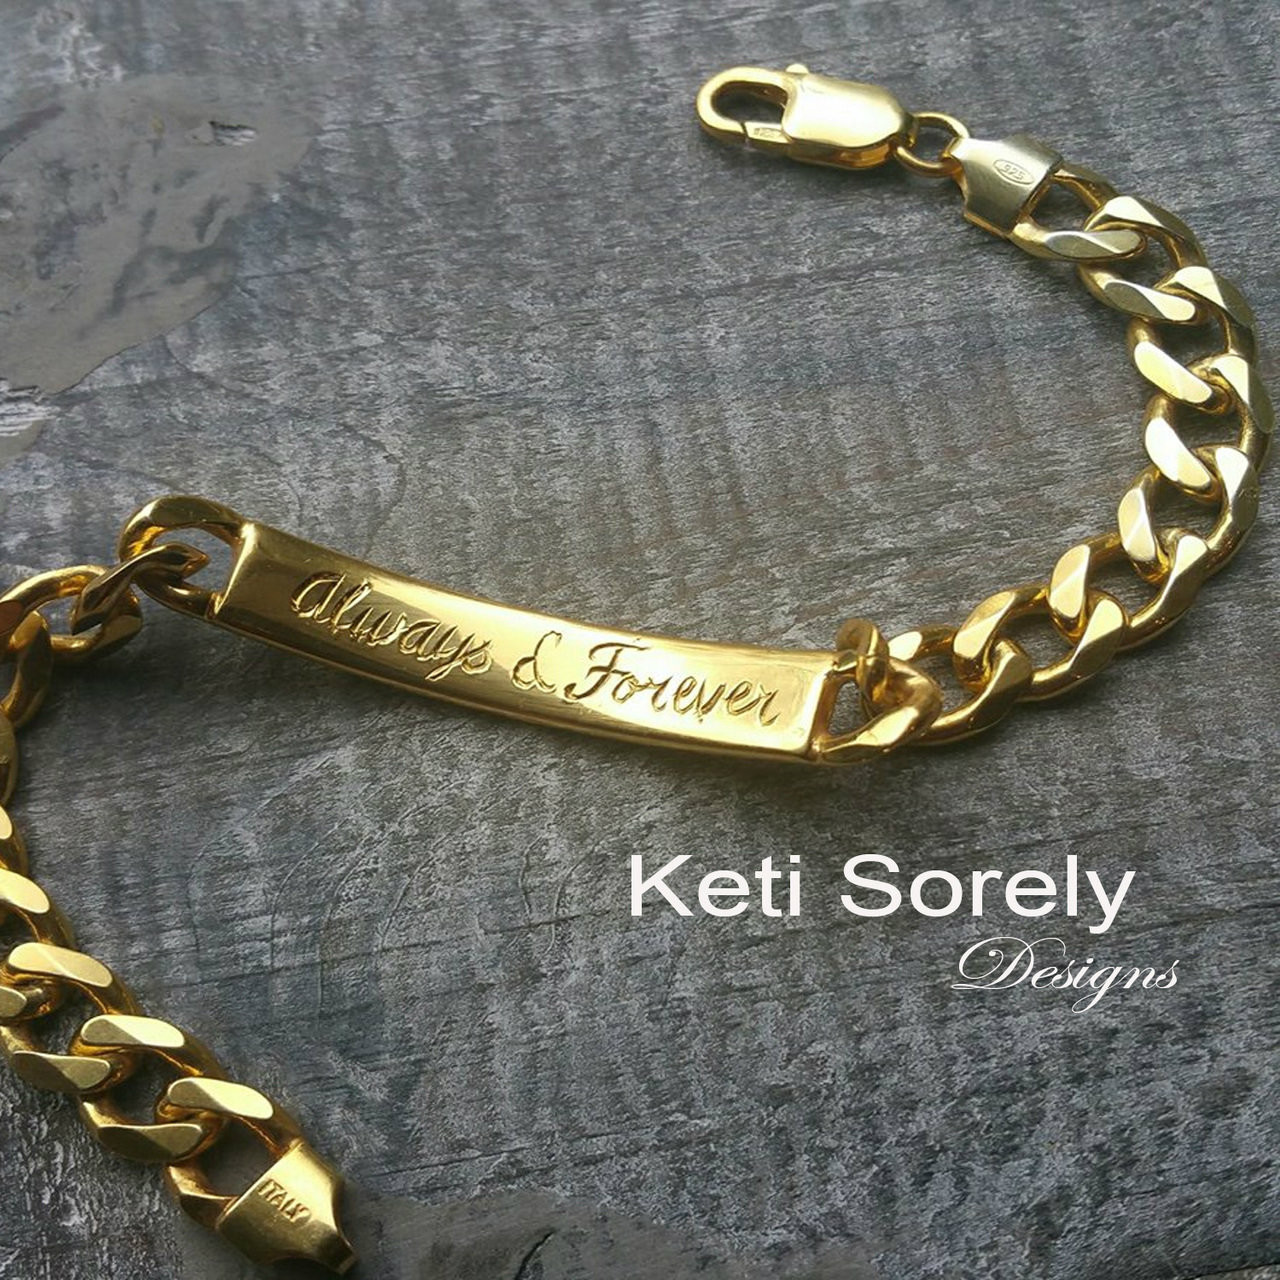 Designer Monogram Bracelet in Sterling Silver or Yellow or 